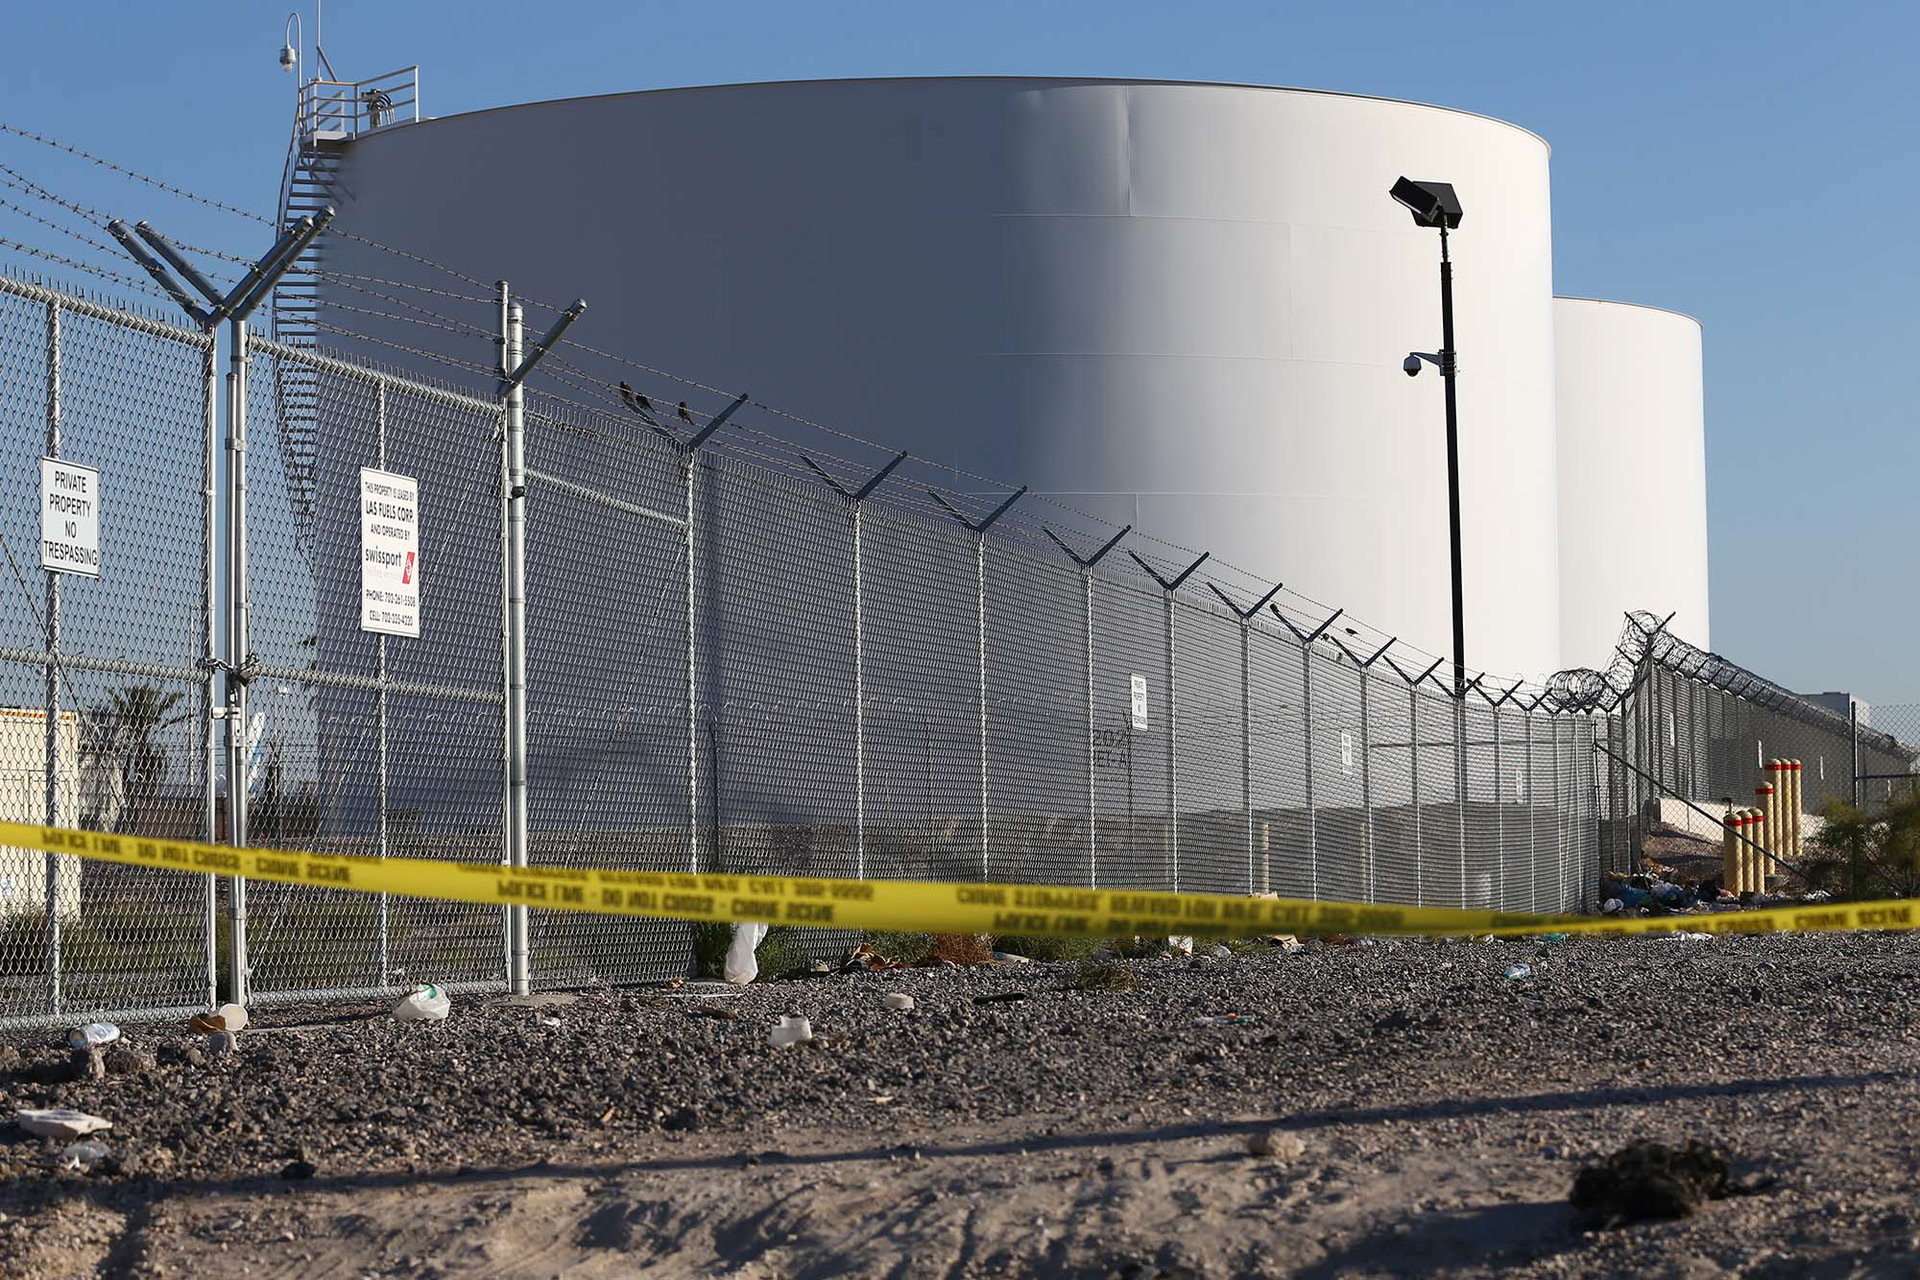 Las Vegas Strip shooter targeted aviation fuel tanks, source says